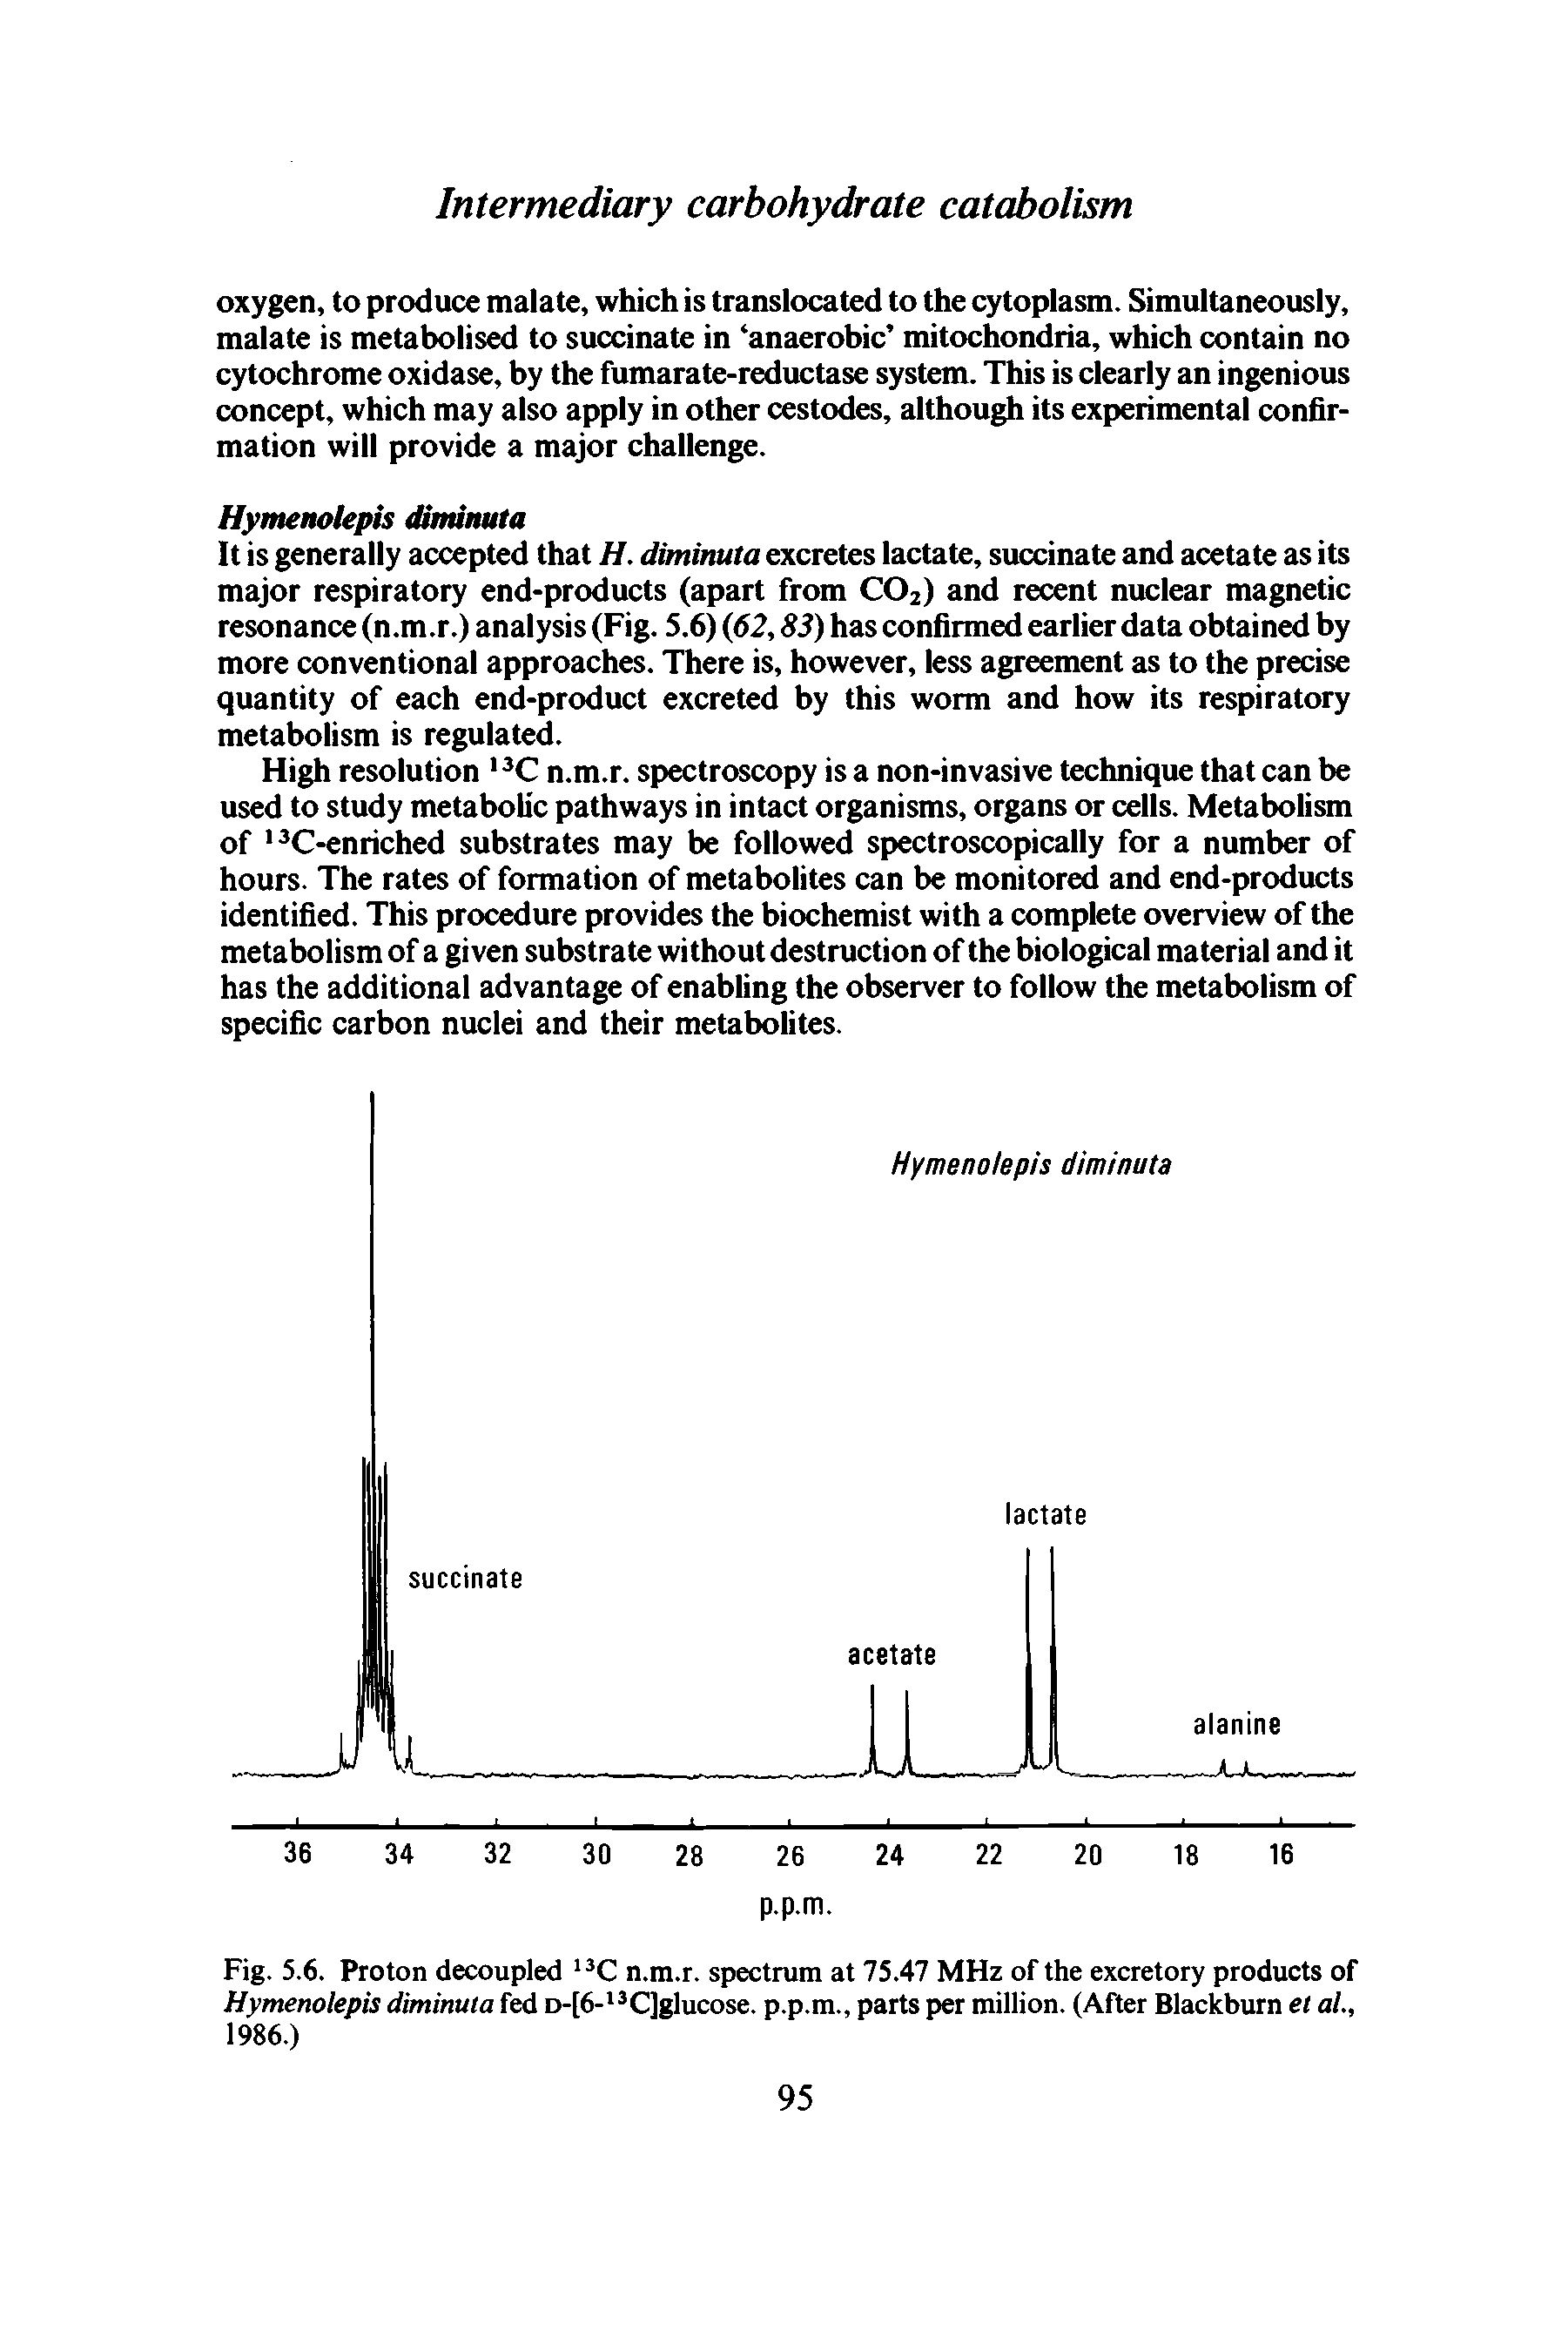 Fig. 5.6. Proton decoupled 13C n.m.r. spectrum at 75.47 MHz of the excretory products of Hymenolepis dimimta fed D-[6-13C]glucose. p.p.m., parts per million. (After Blackburn et al, 1986.)...